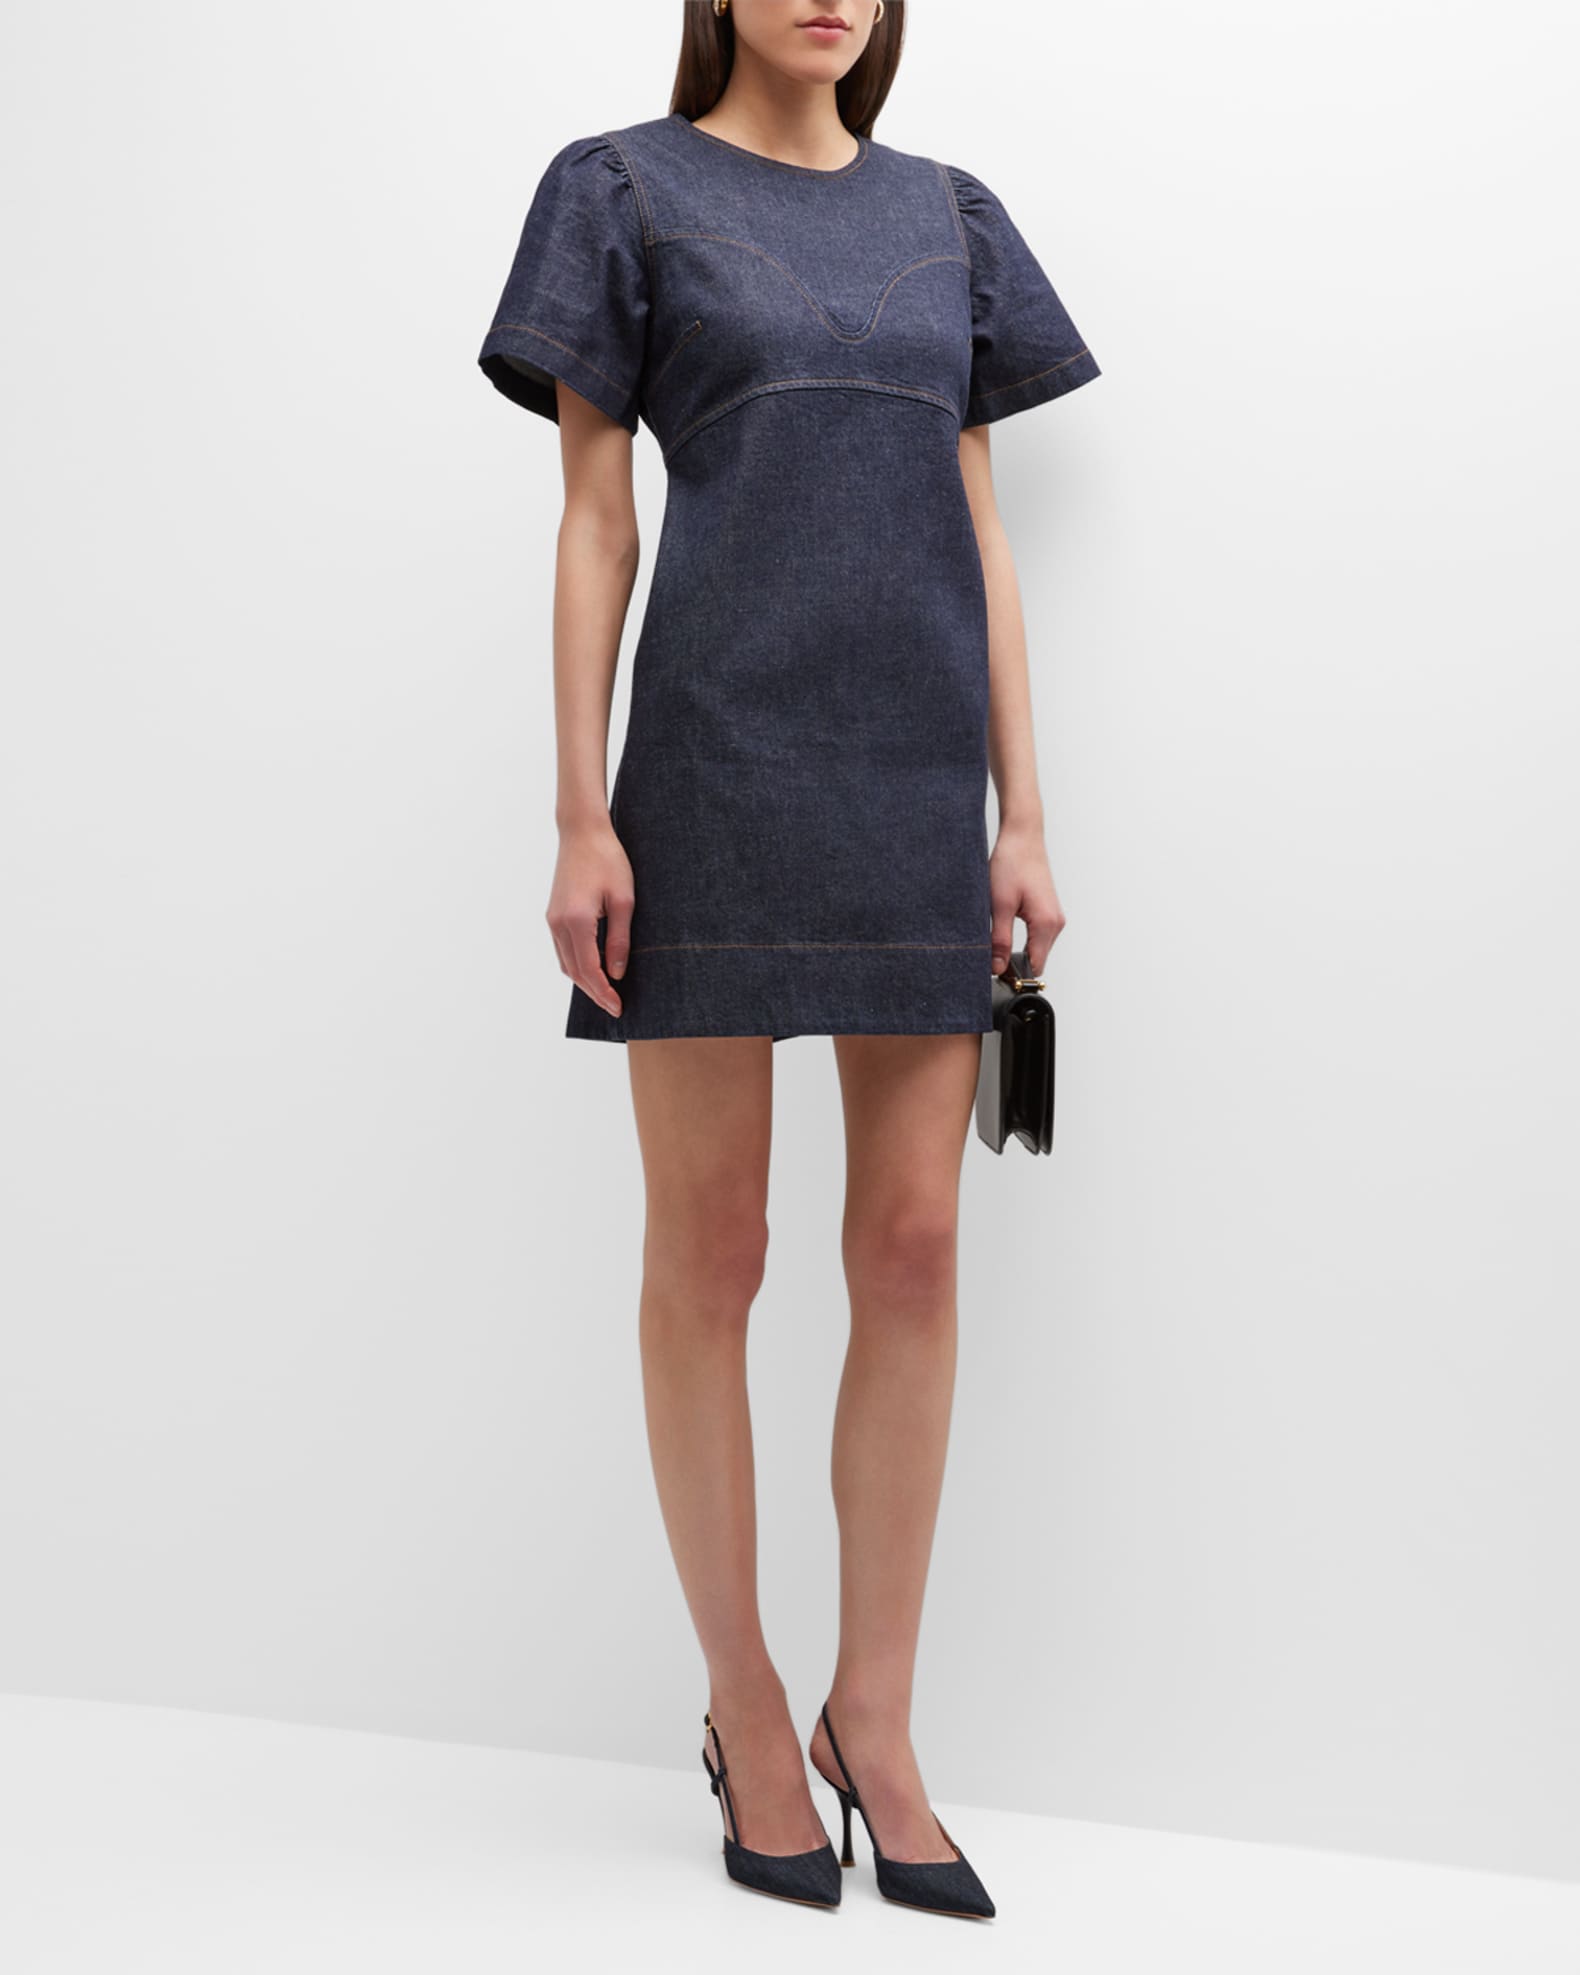 Tanya Taylor Antonella Contrast-Stitch Denim Mini Dress | Neiman Marcus